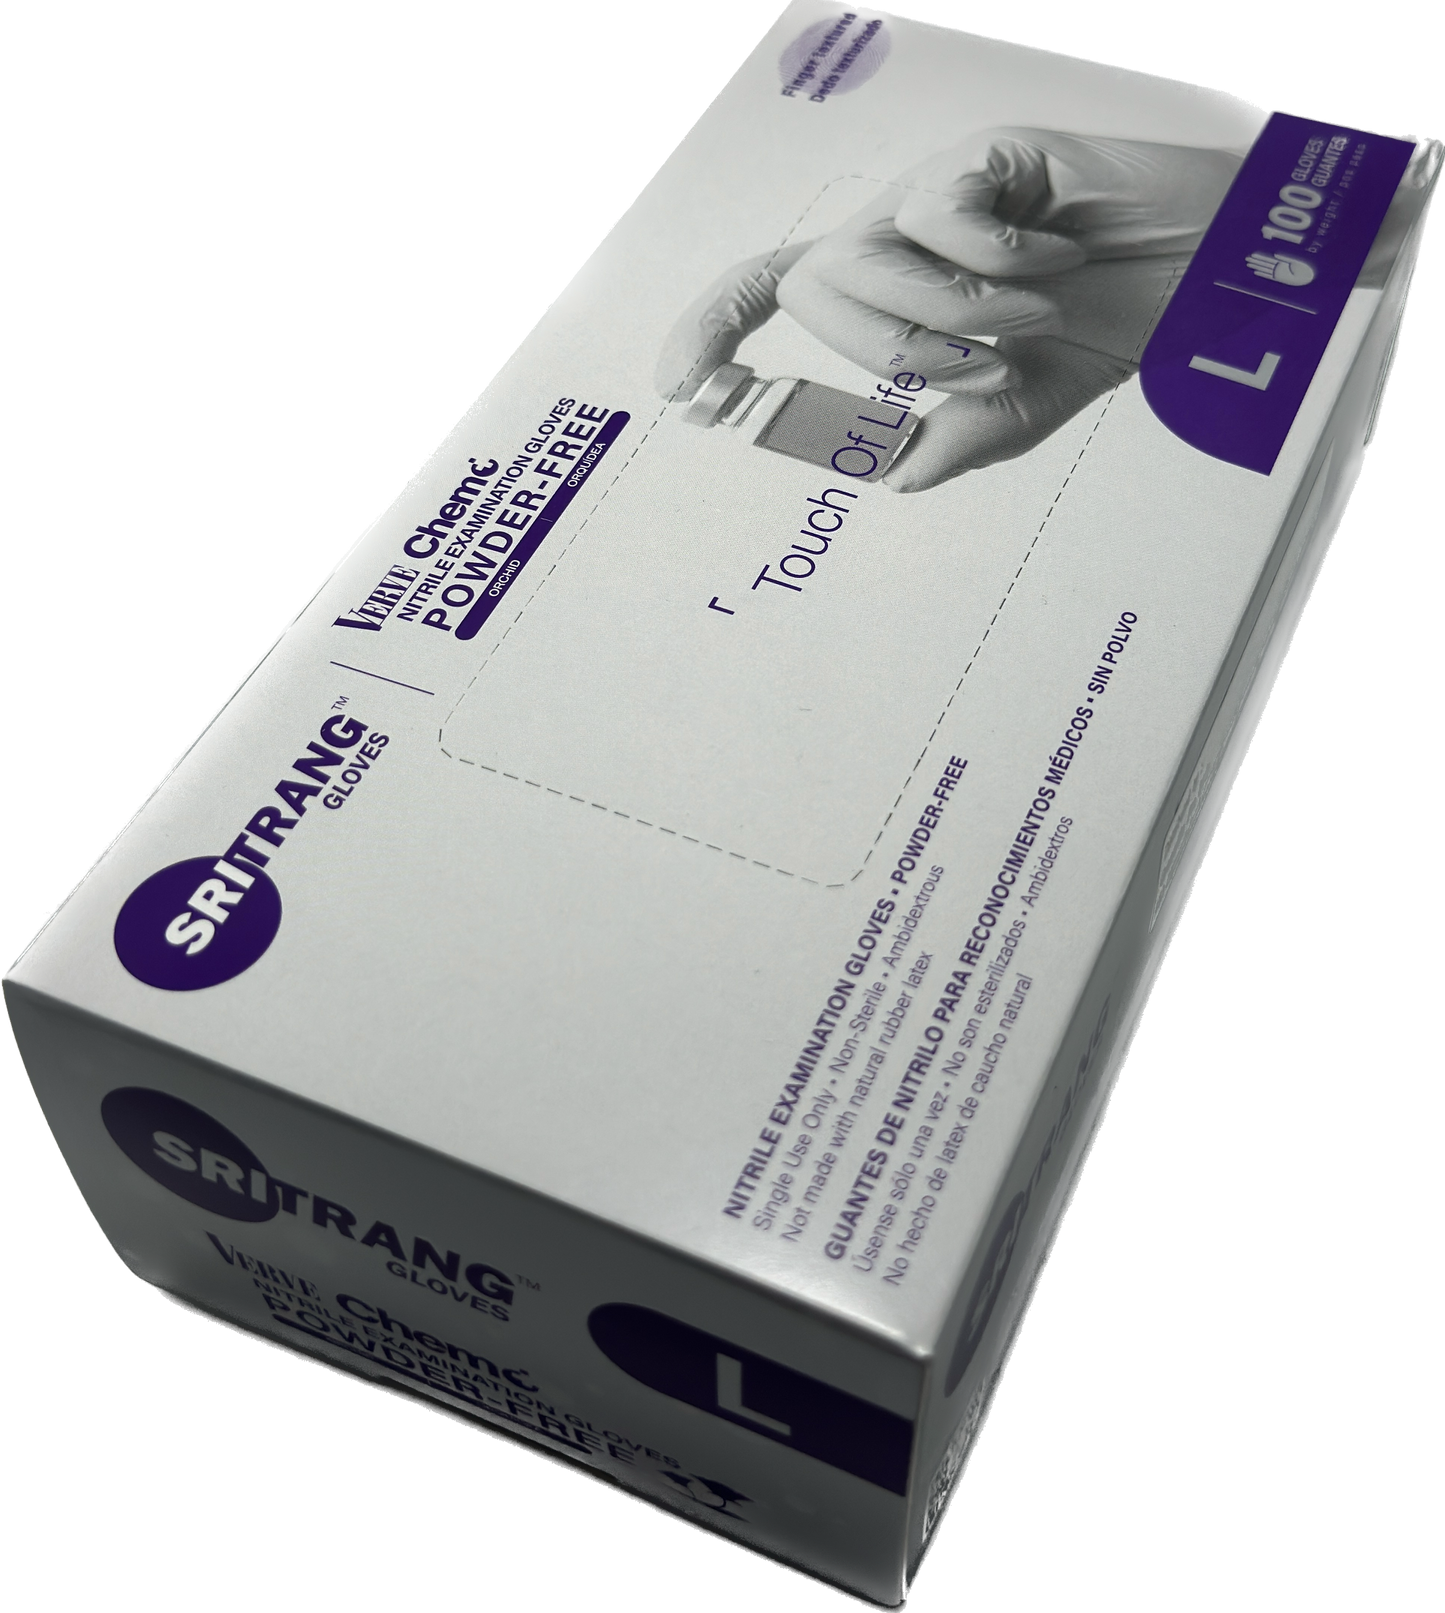 Sri Trang™ Nitrile Gloves Powder-free Medical Grade Examination Gloves